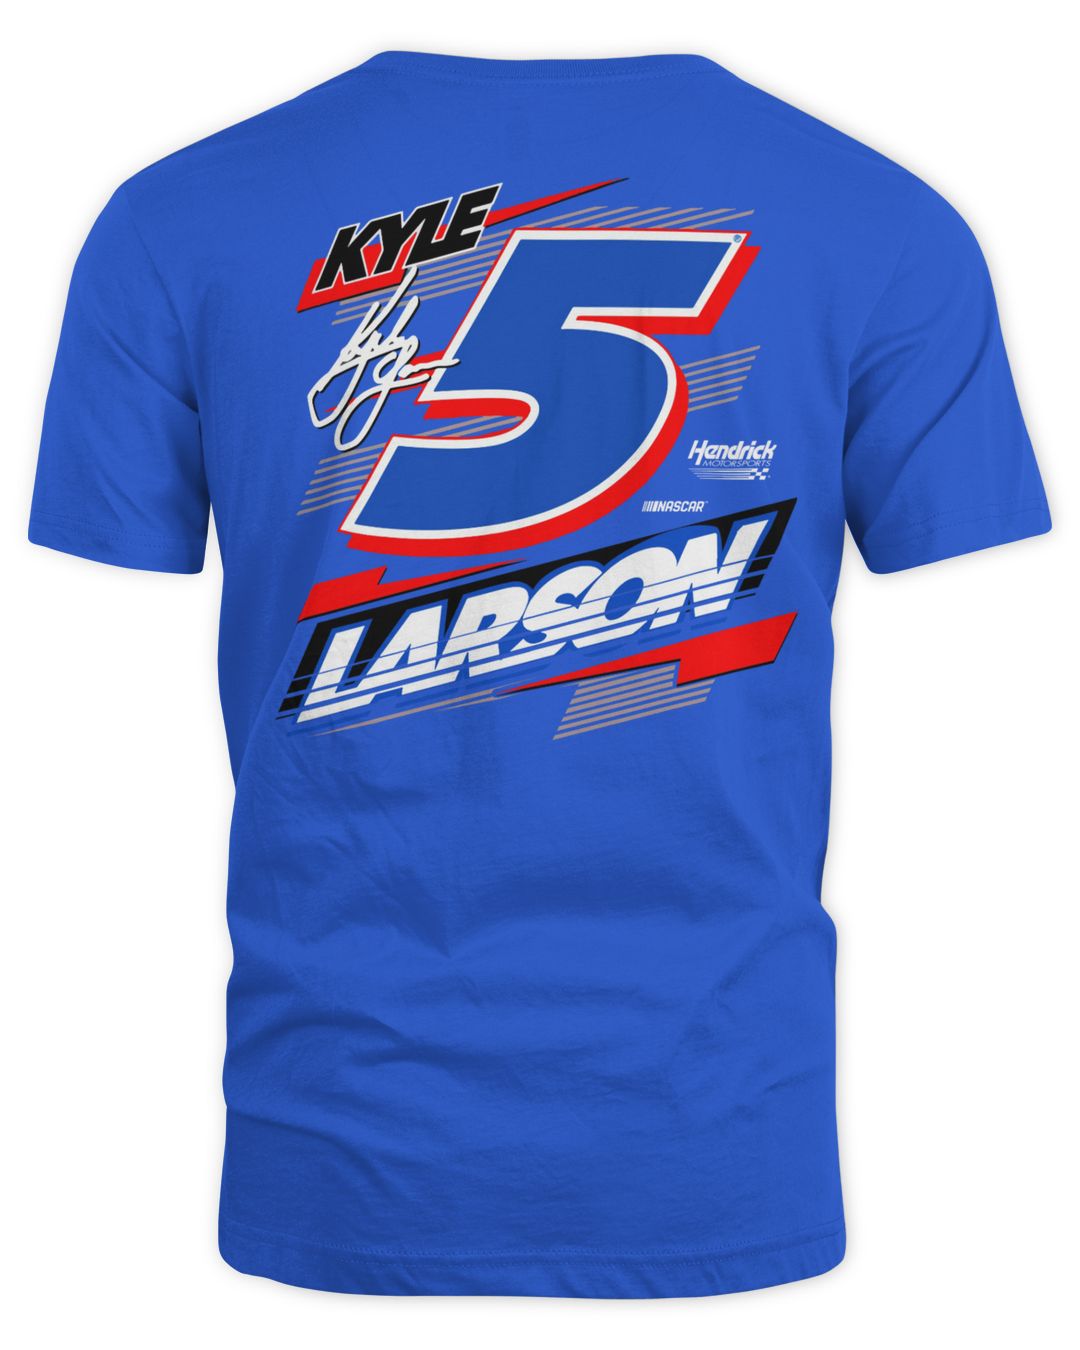 Kyle Larson Hendrick Motorsports Team Collection Xtreme Shirt